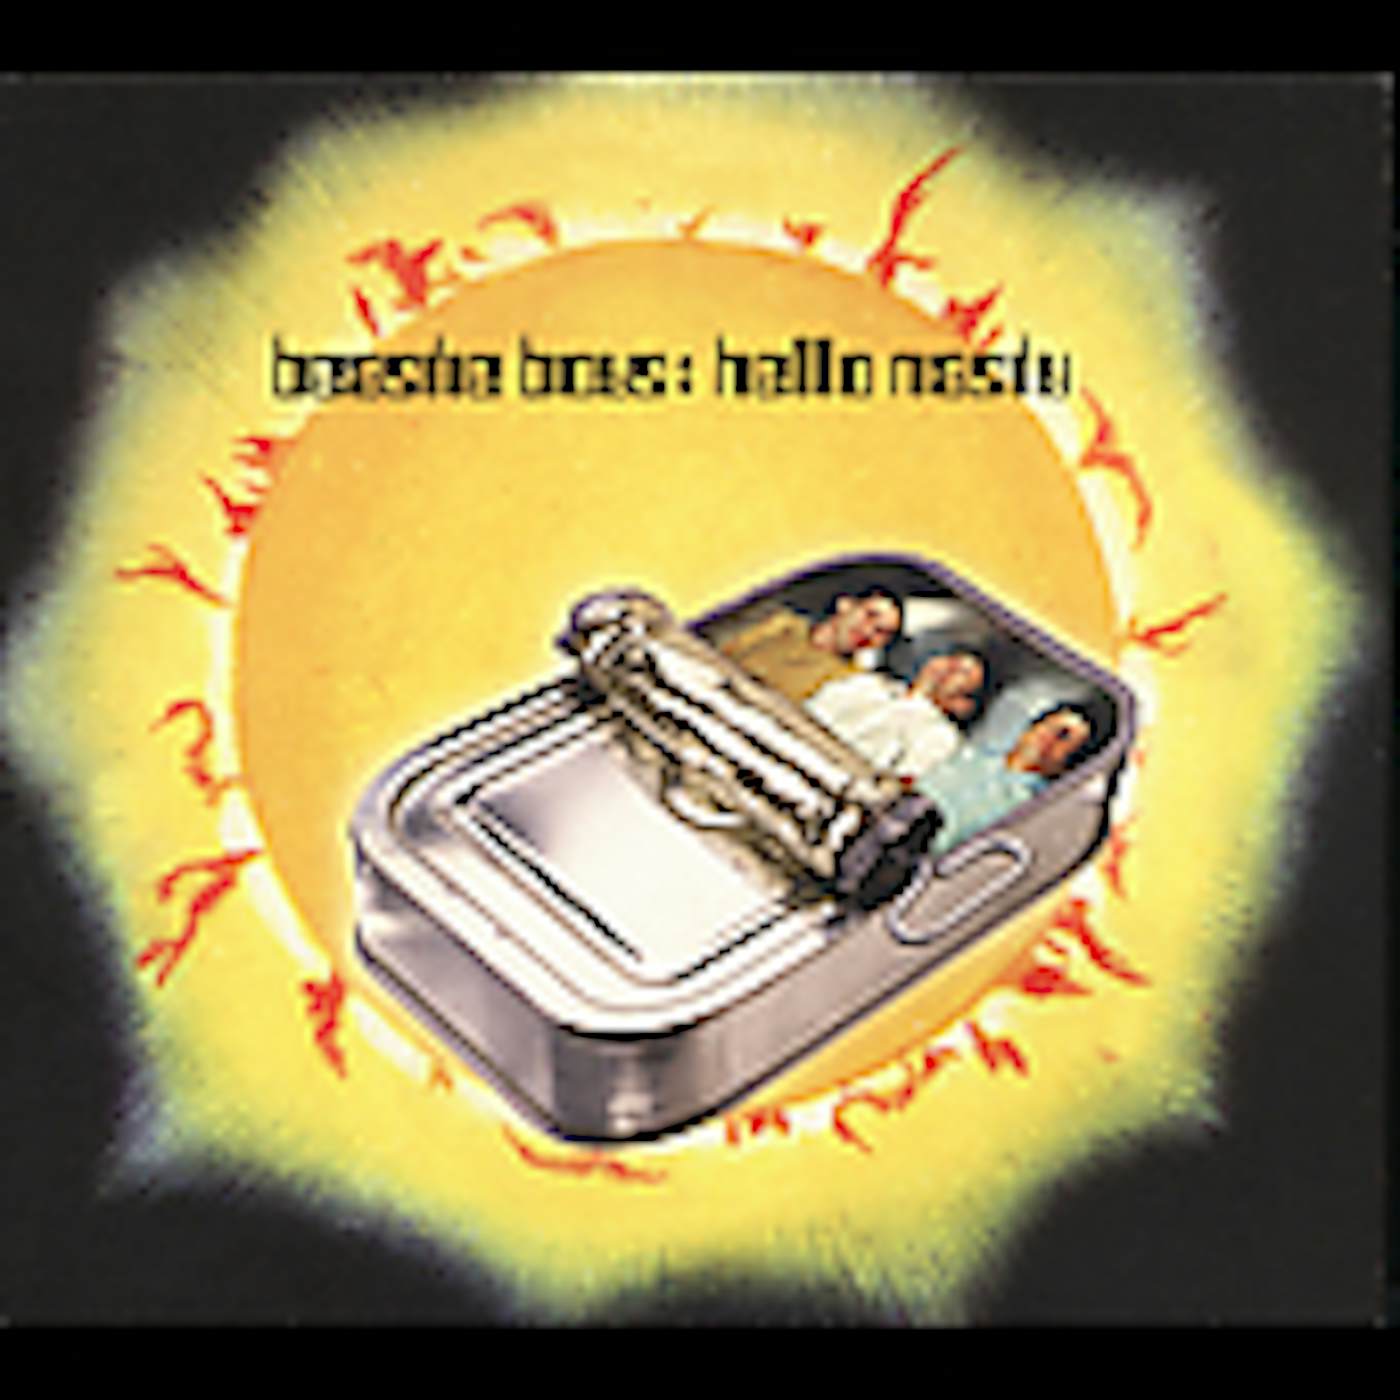 Beastie Boys HELLO NASTY CD